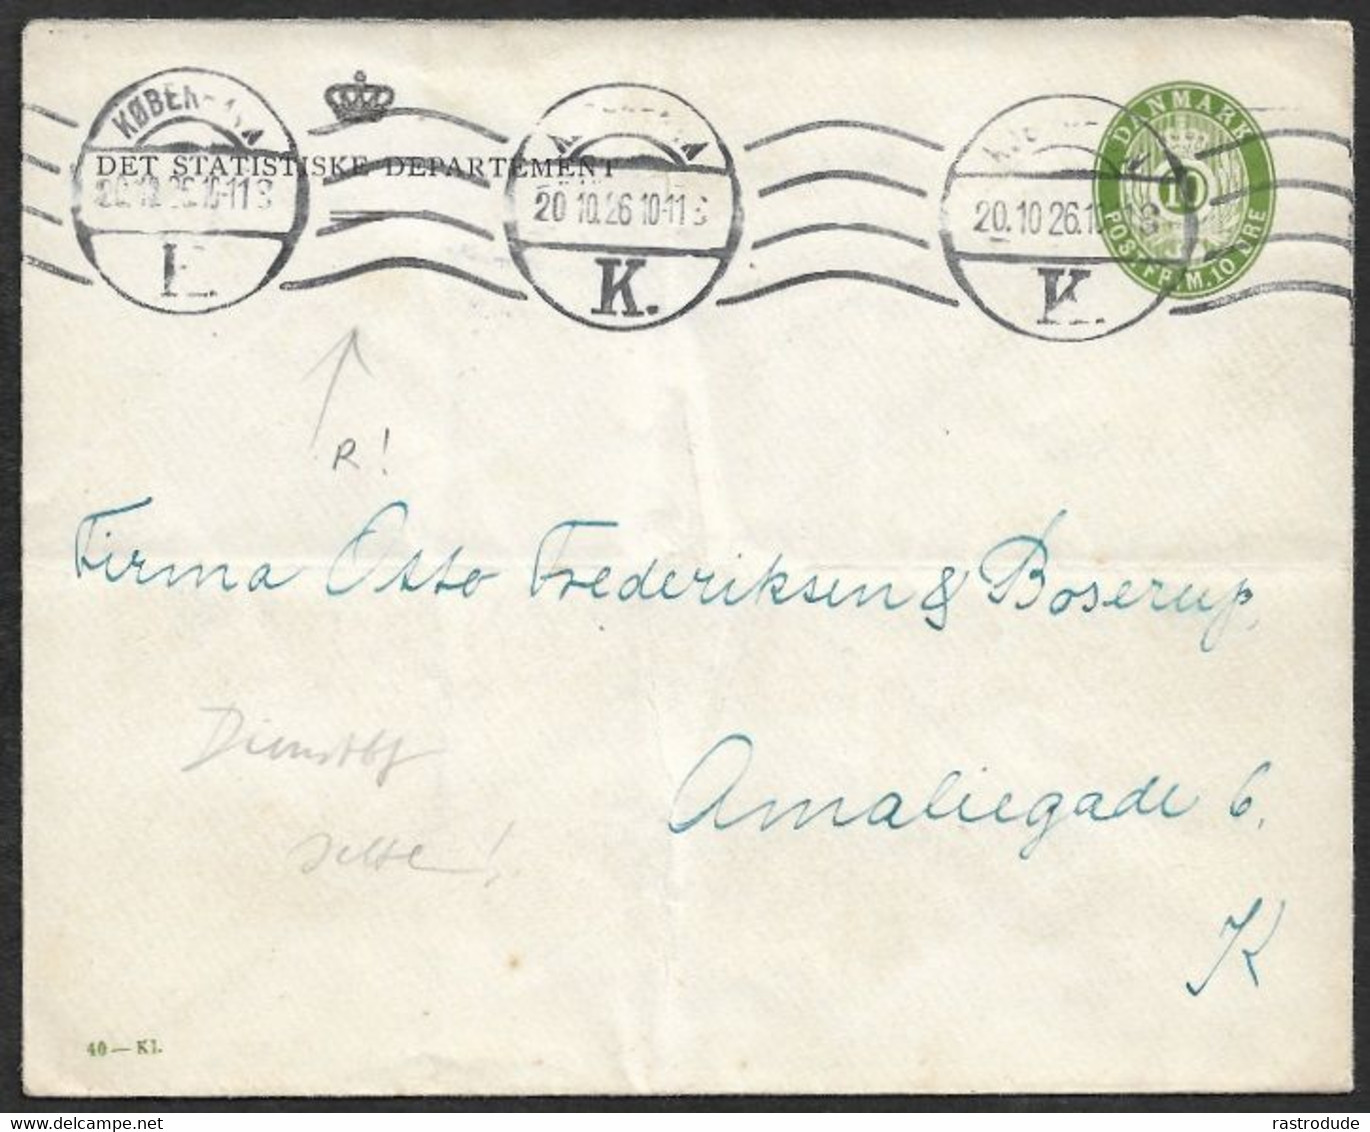 1926 DENMARK - OFFICIAL SERVICE DIENSTBRIEF POSTAL STATIONERY ENVELOPE 10 öre - USED - RARE - Postal Stationery